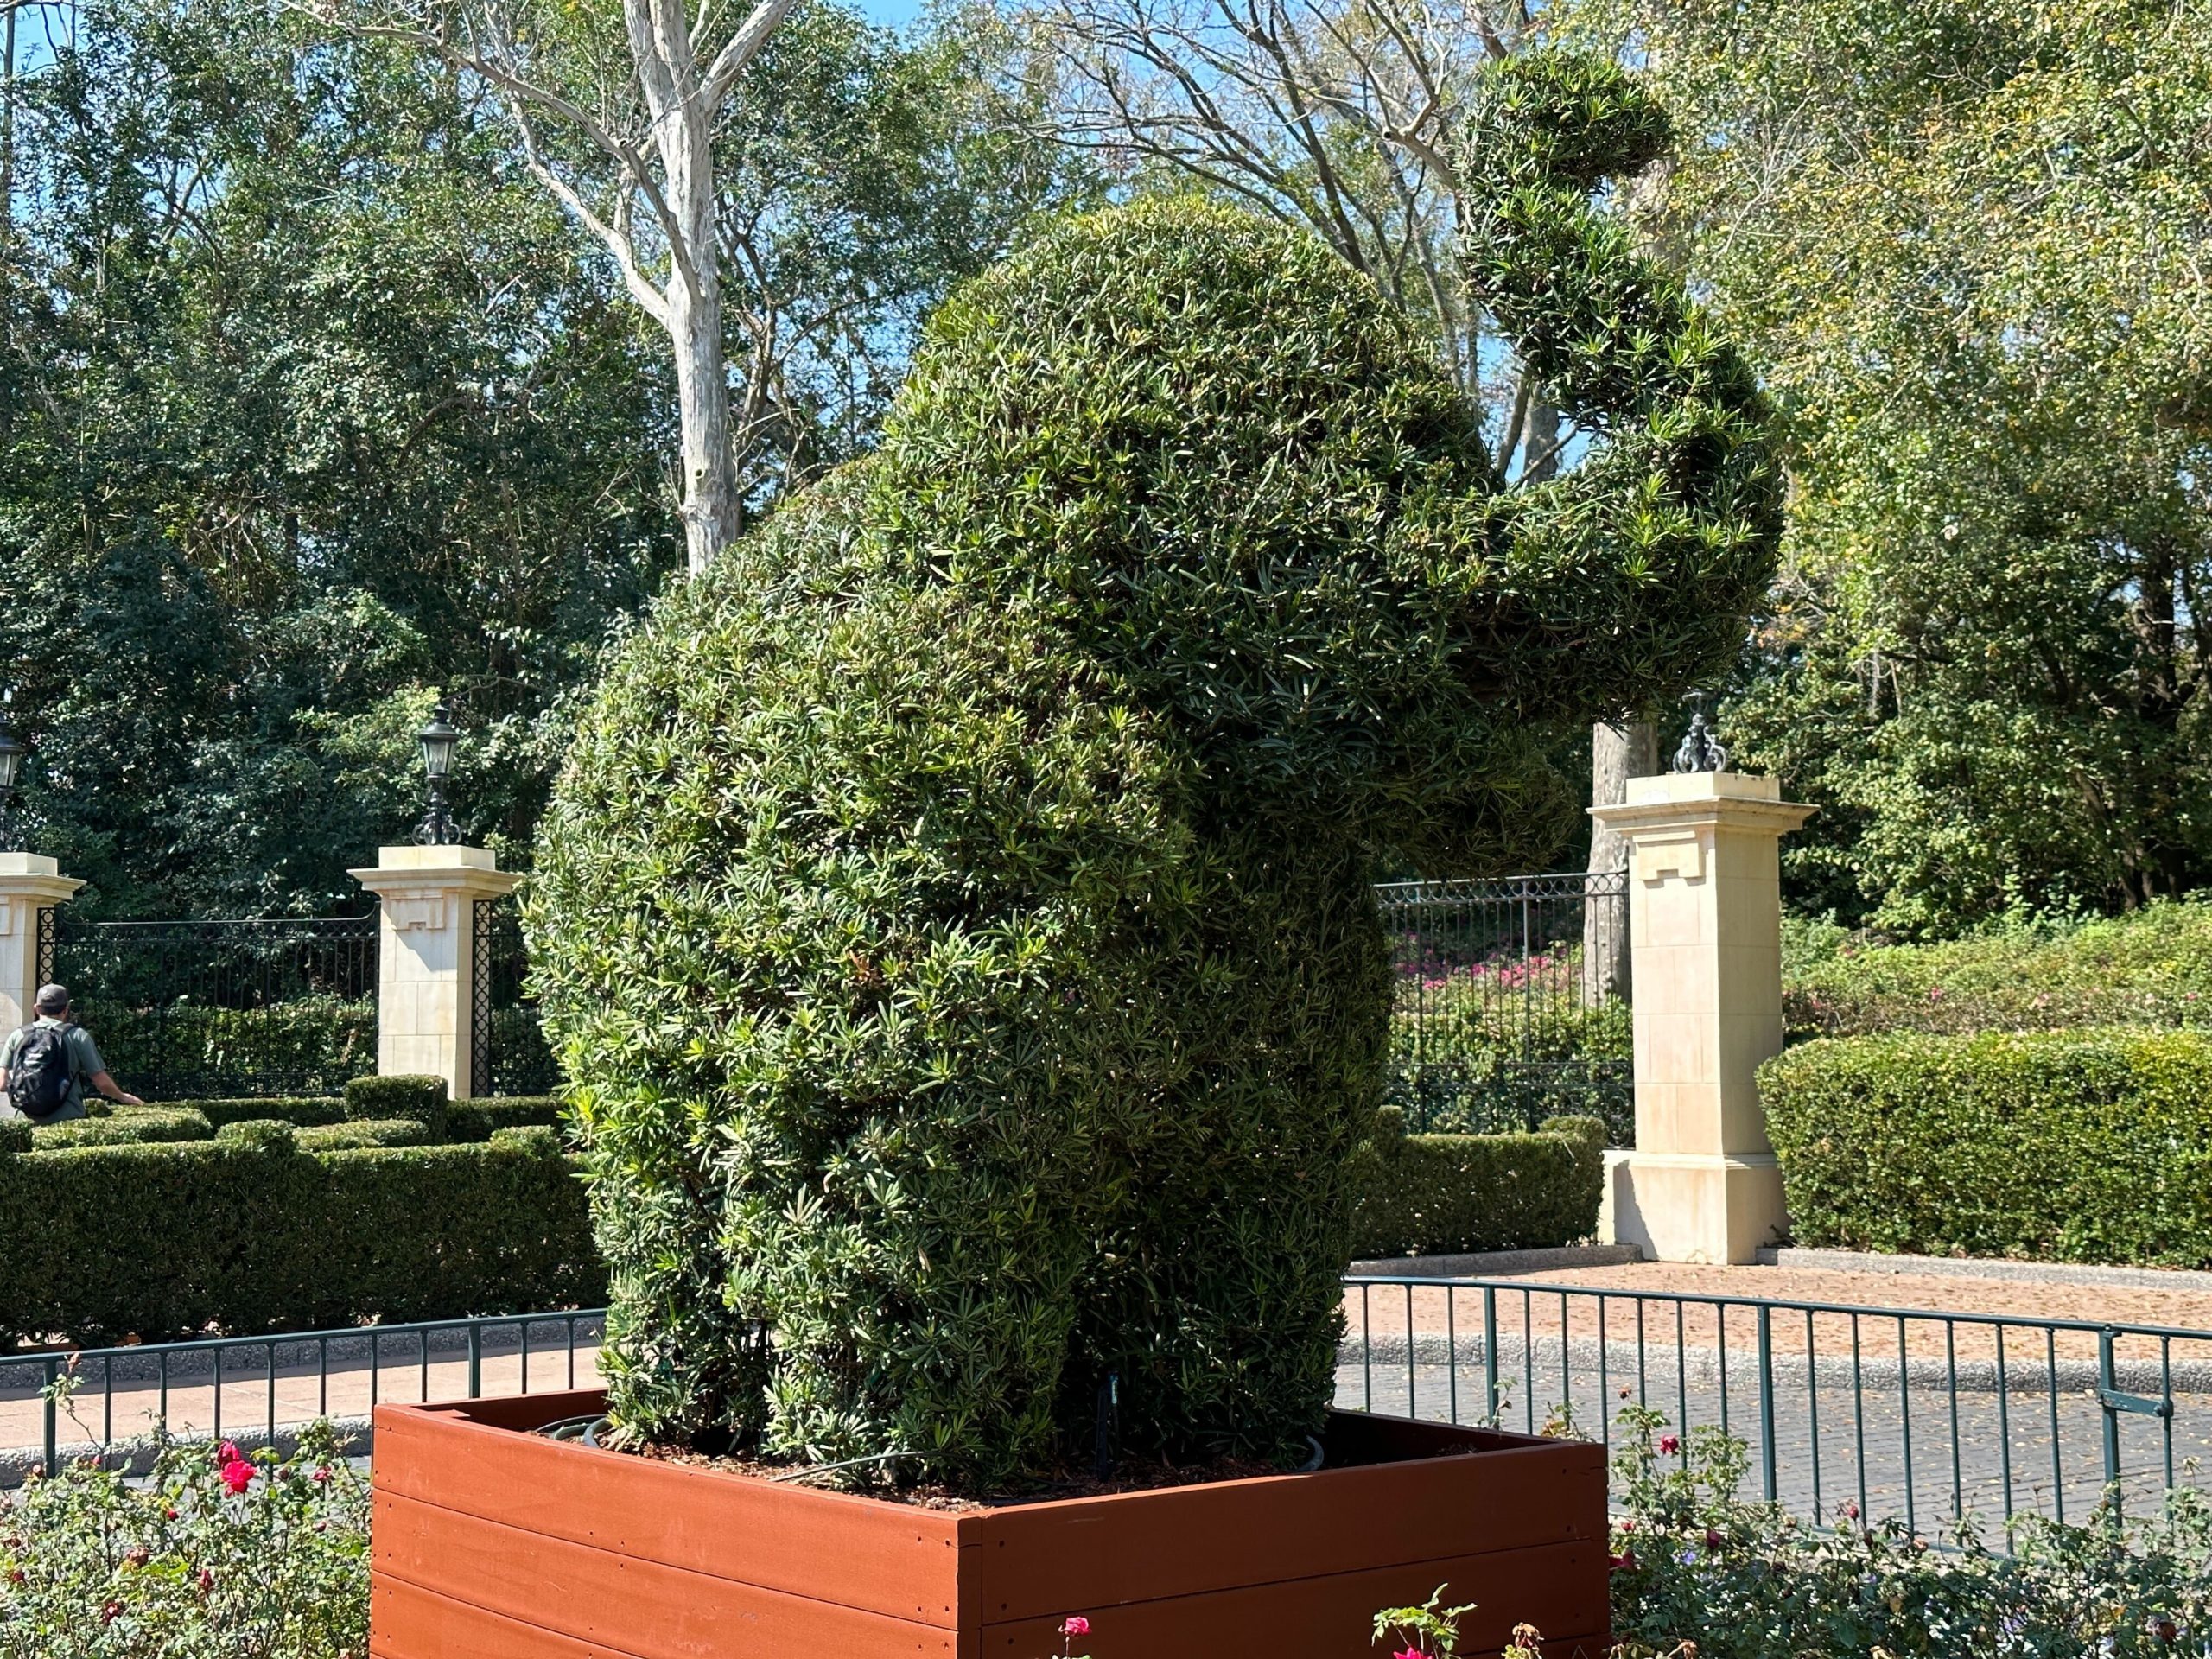 Mickey & Elephant Flower & Garden